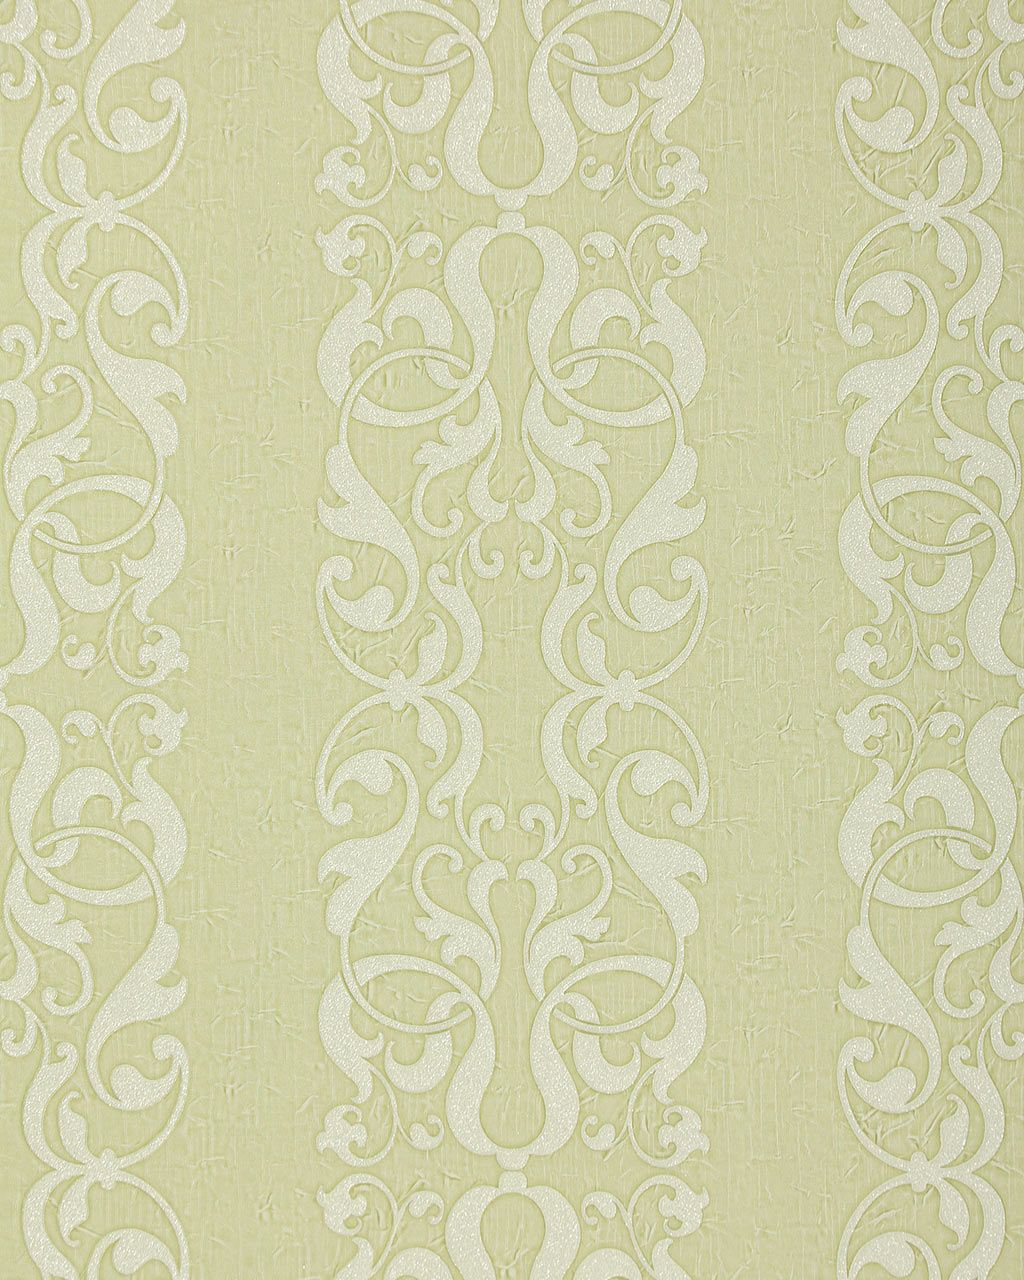 EDEM 829 28 Barock Streifen Tapete Damask Muster grün beige hell